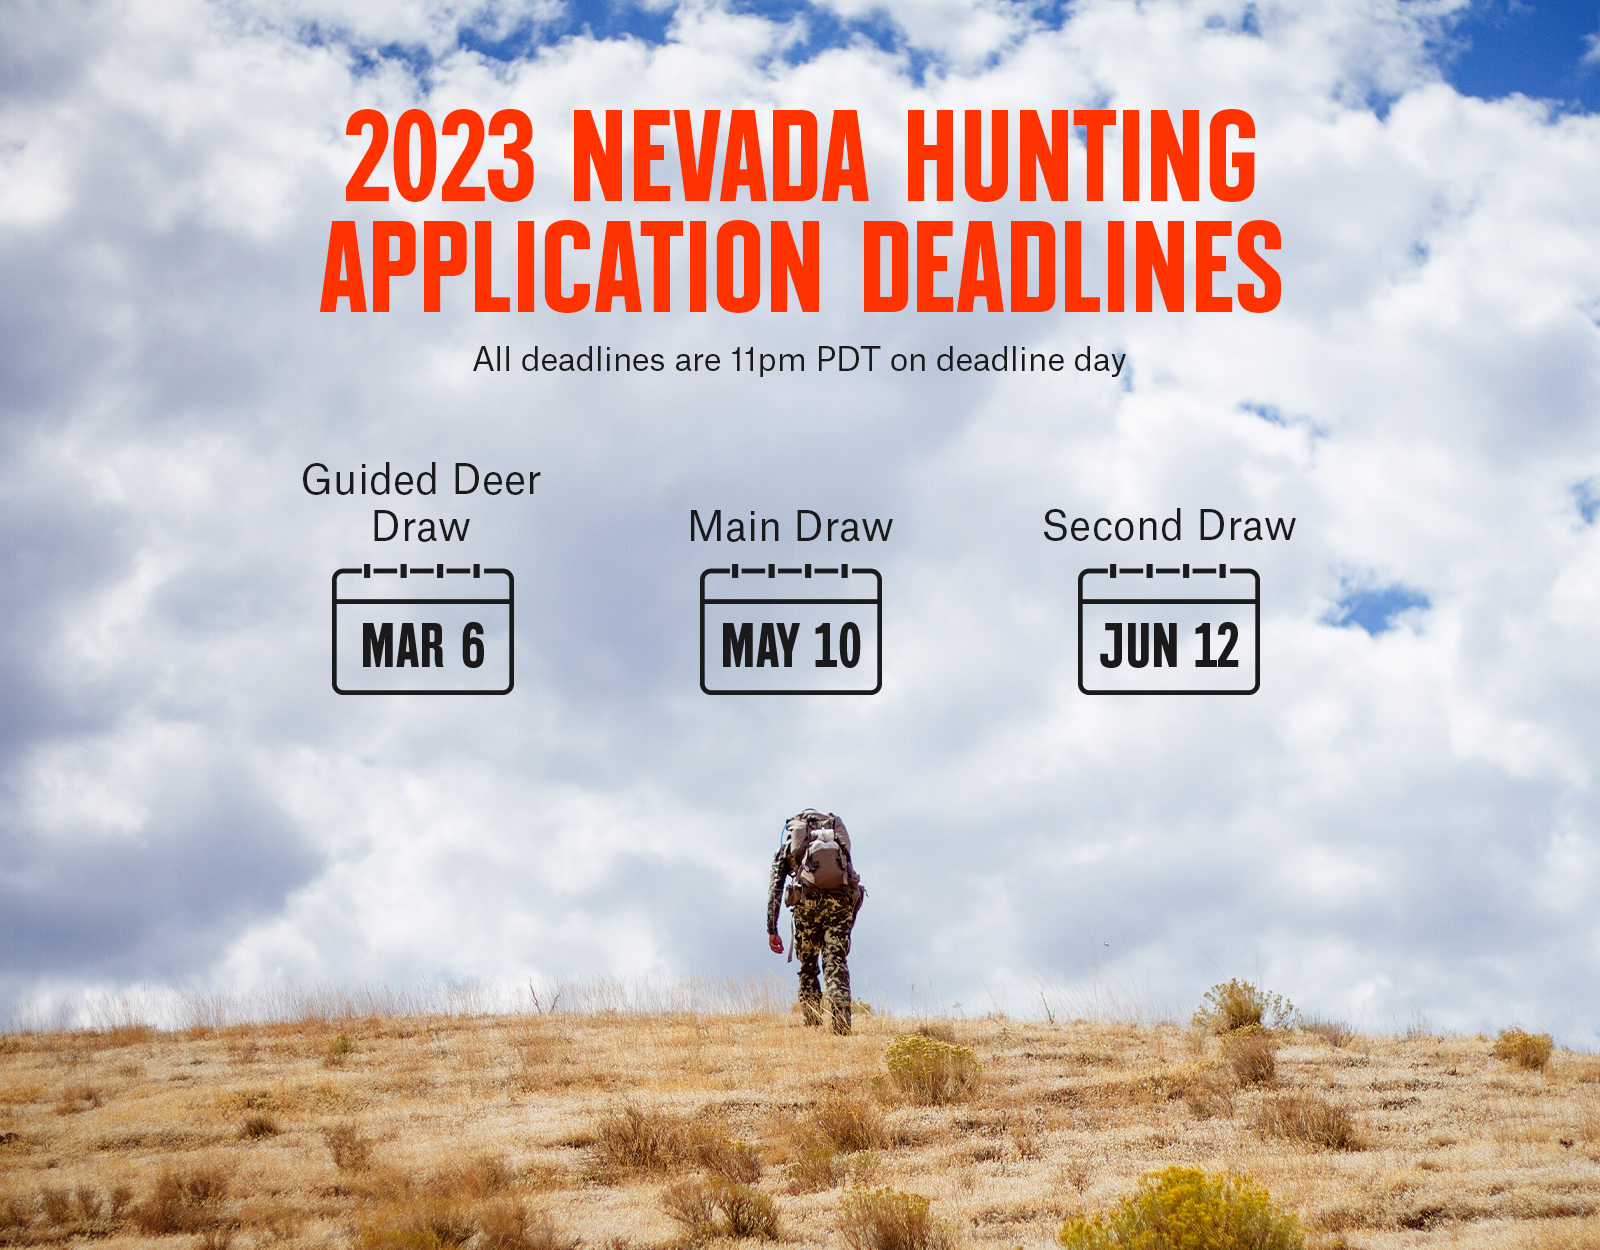 Nevada hunting application deadlines